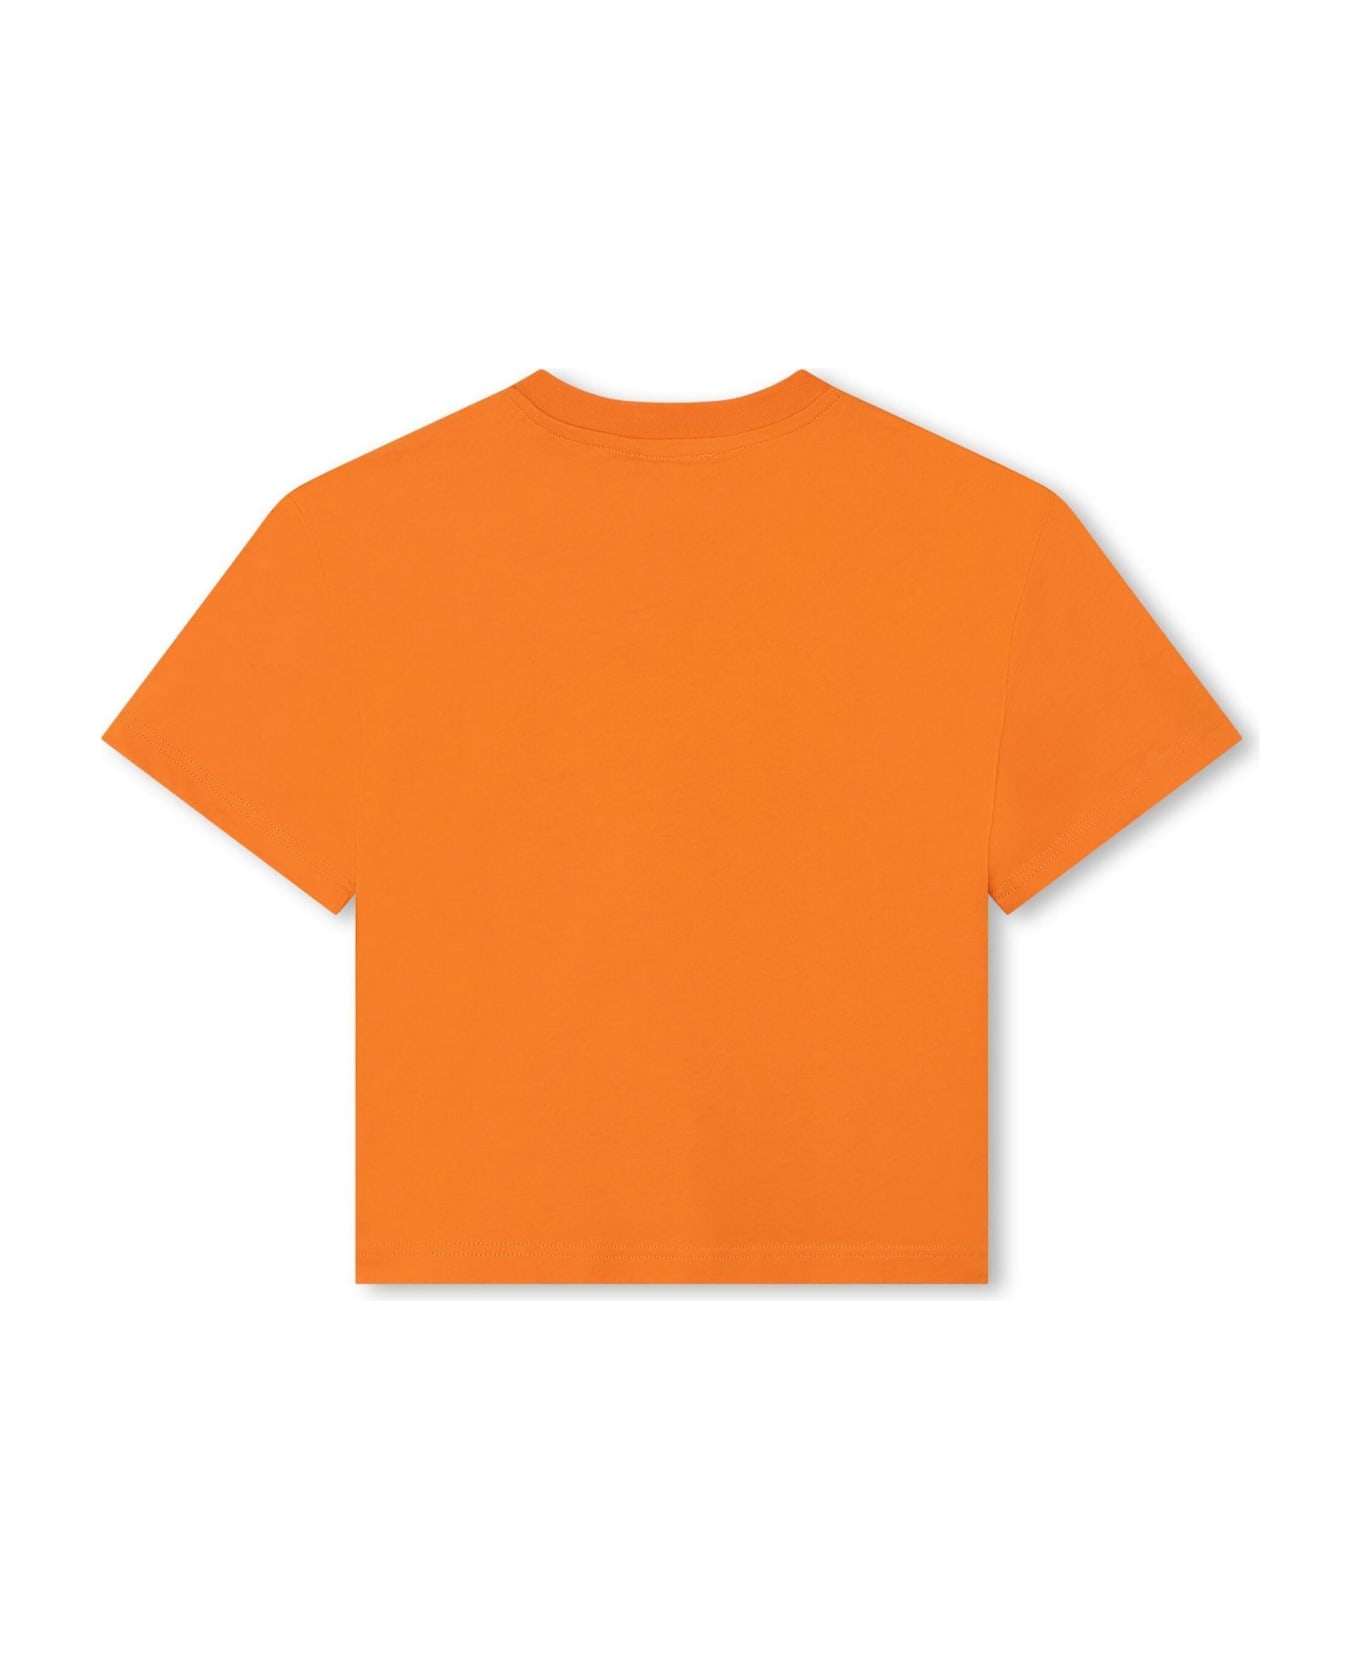 Lanvin T-shirts And Polos Orange - Orange